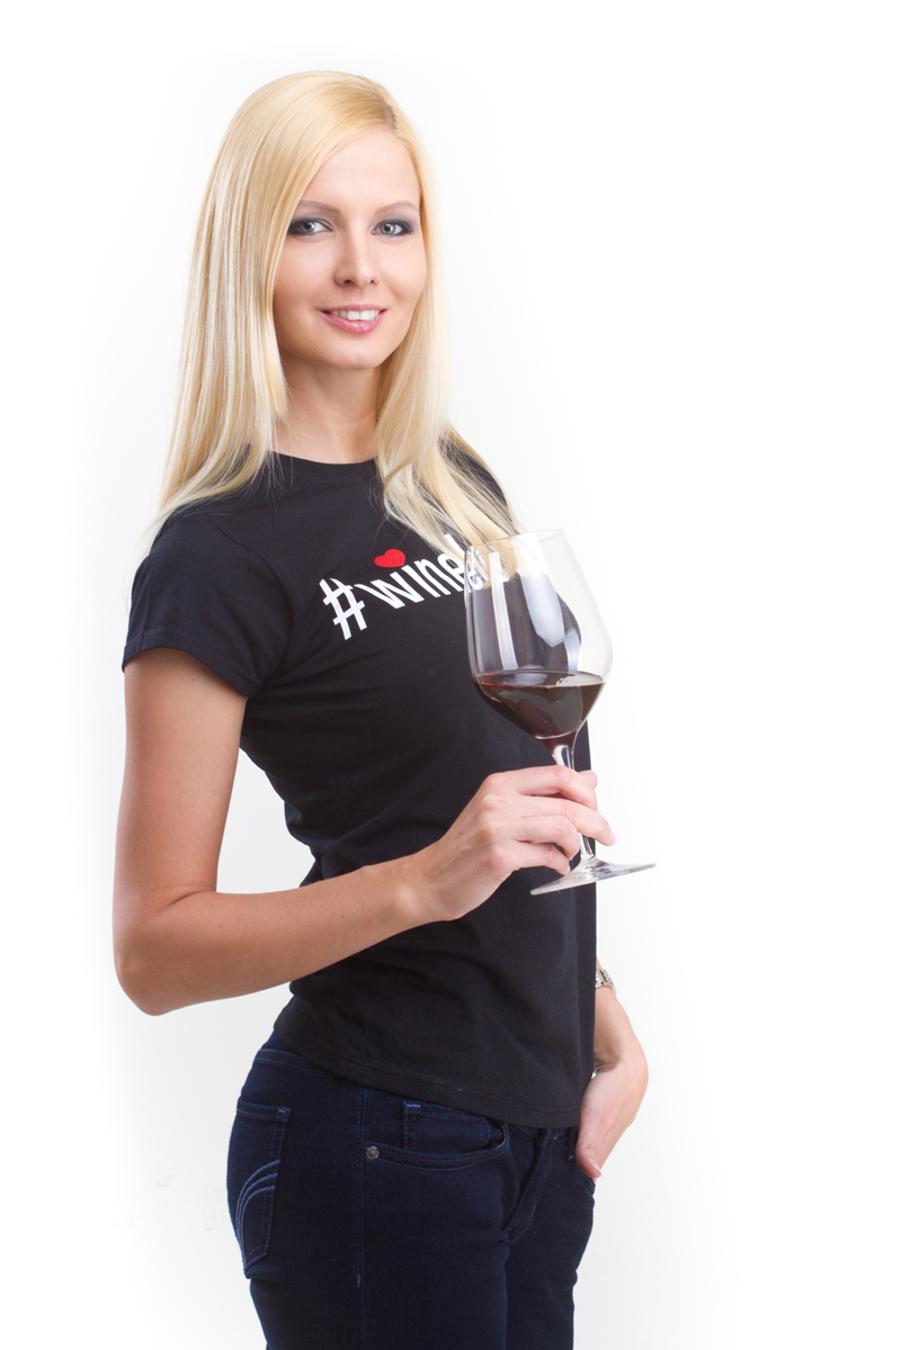 Rita Tóth AIWS, #Winelover Ambassador